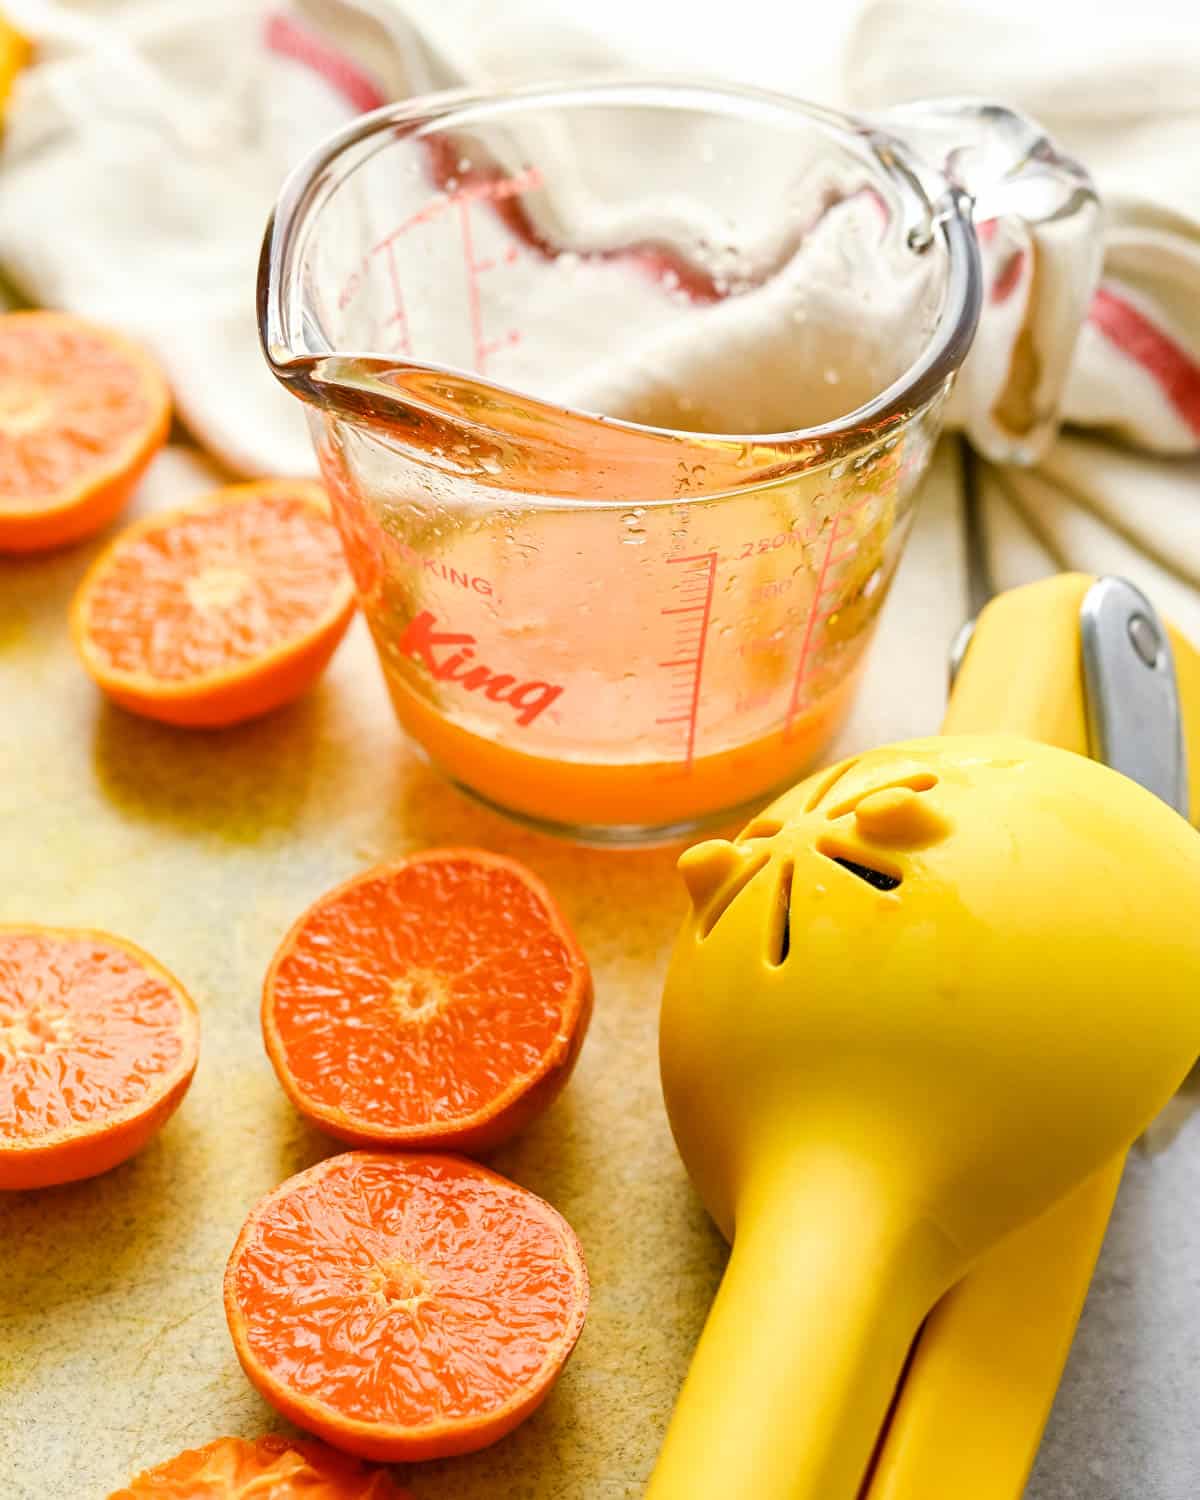 Squeezing mandarins for their juice.